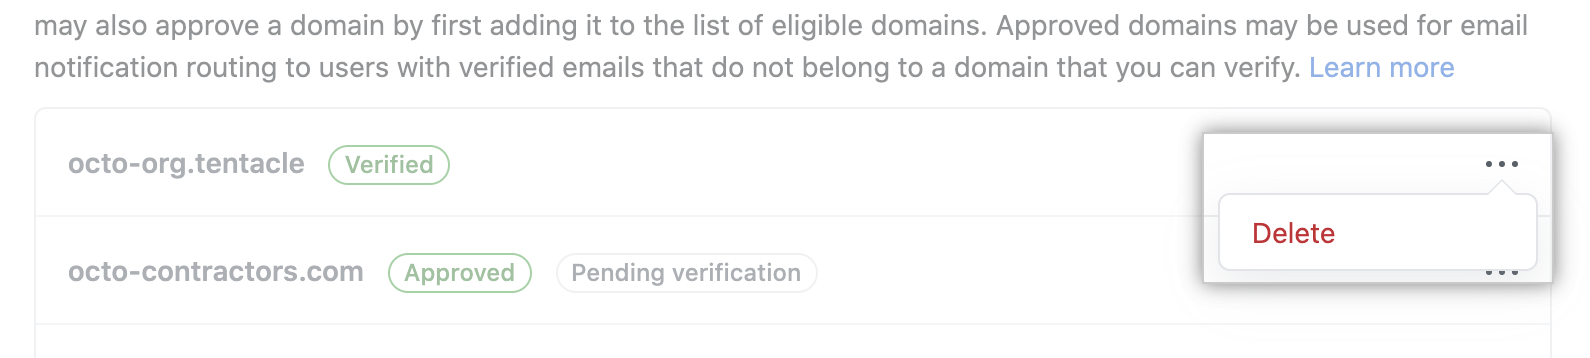 "Delete" for a domain